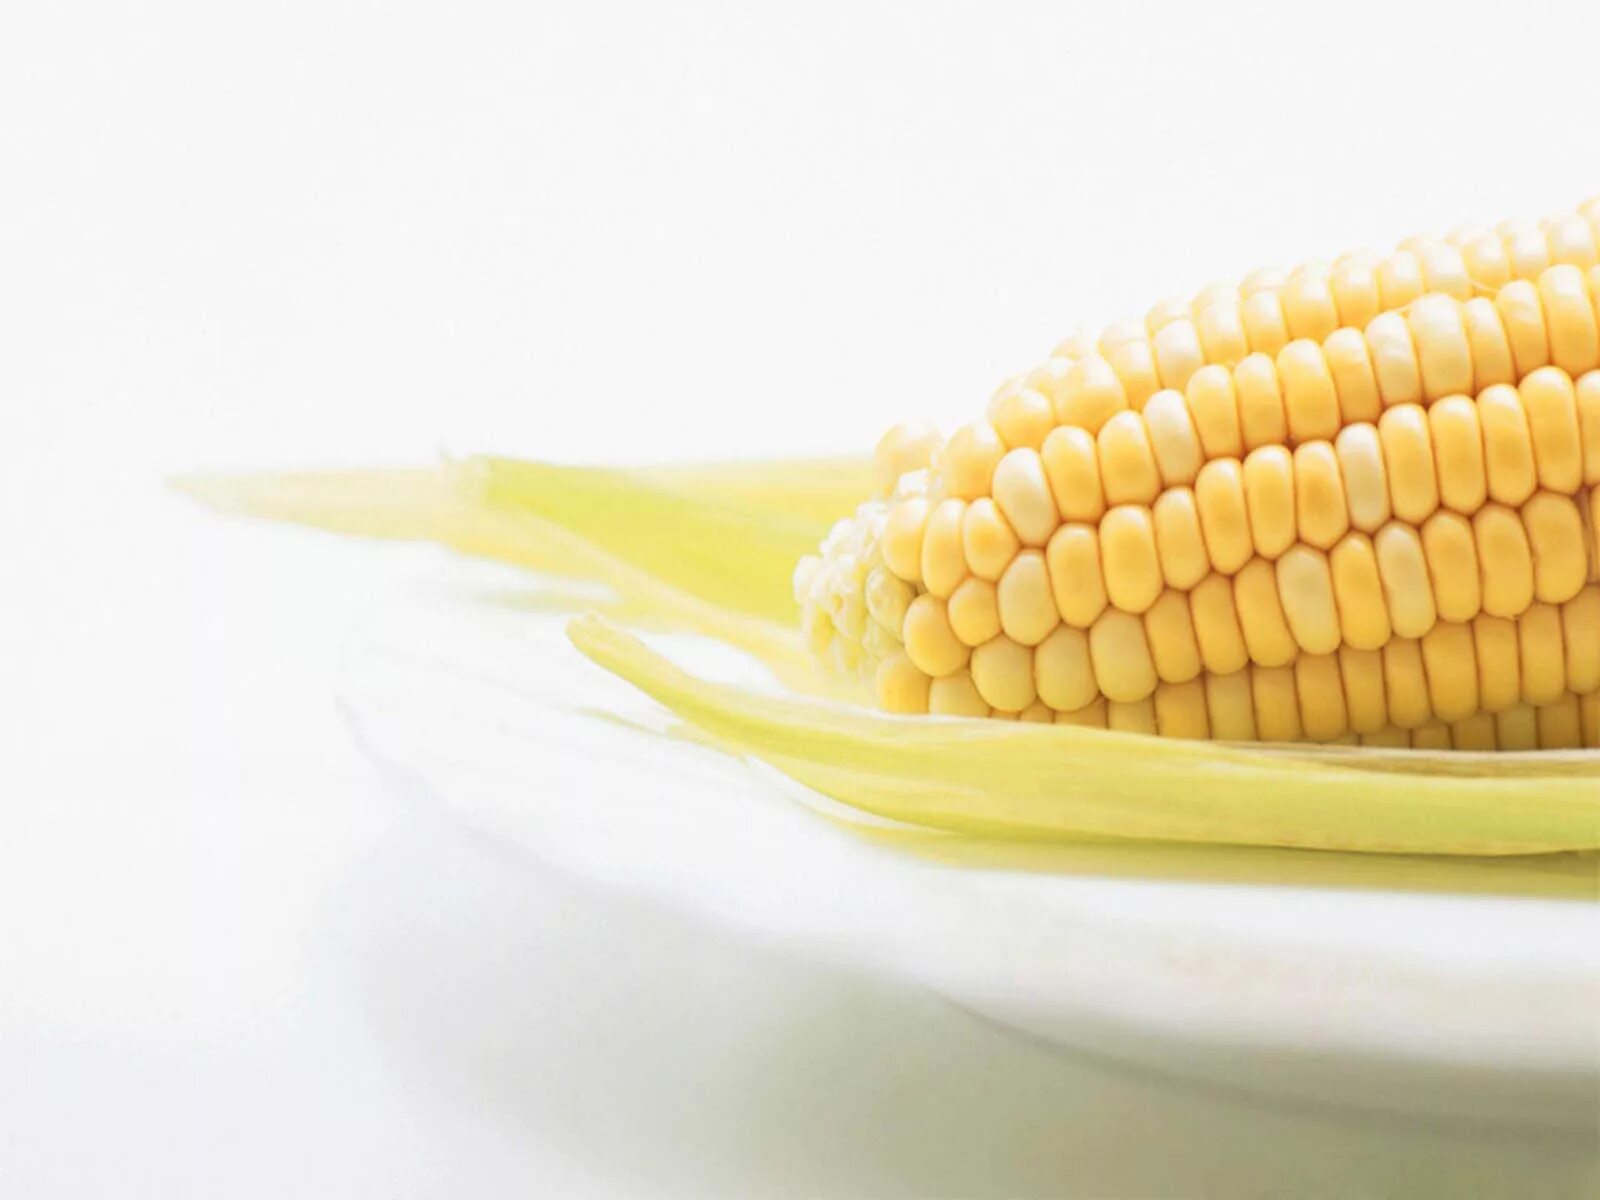 Кукуруза. Кукуруза фон. Вареная кукуруза. Кукуруза (зерно). Corn me